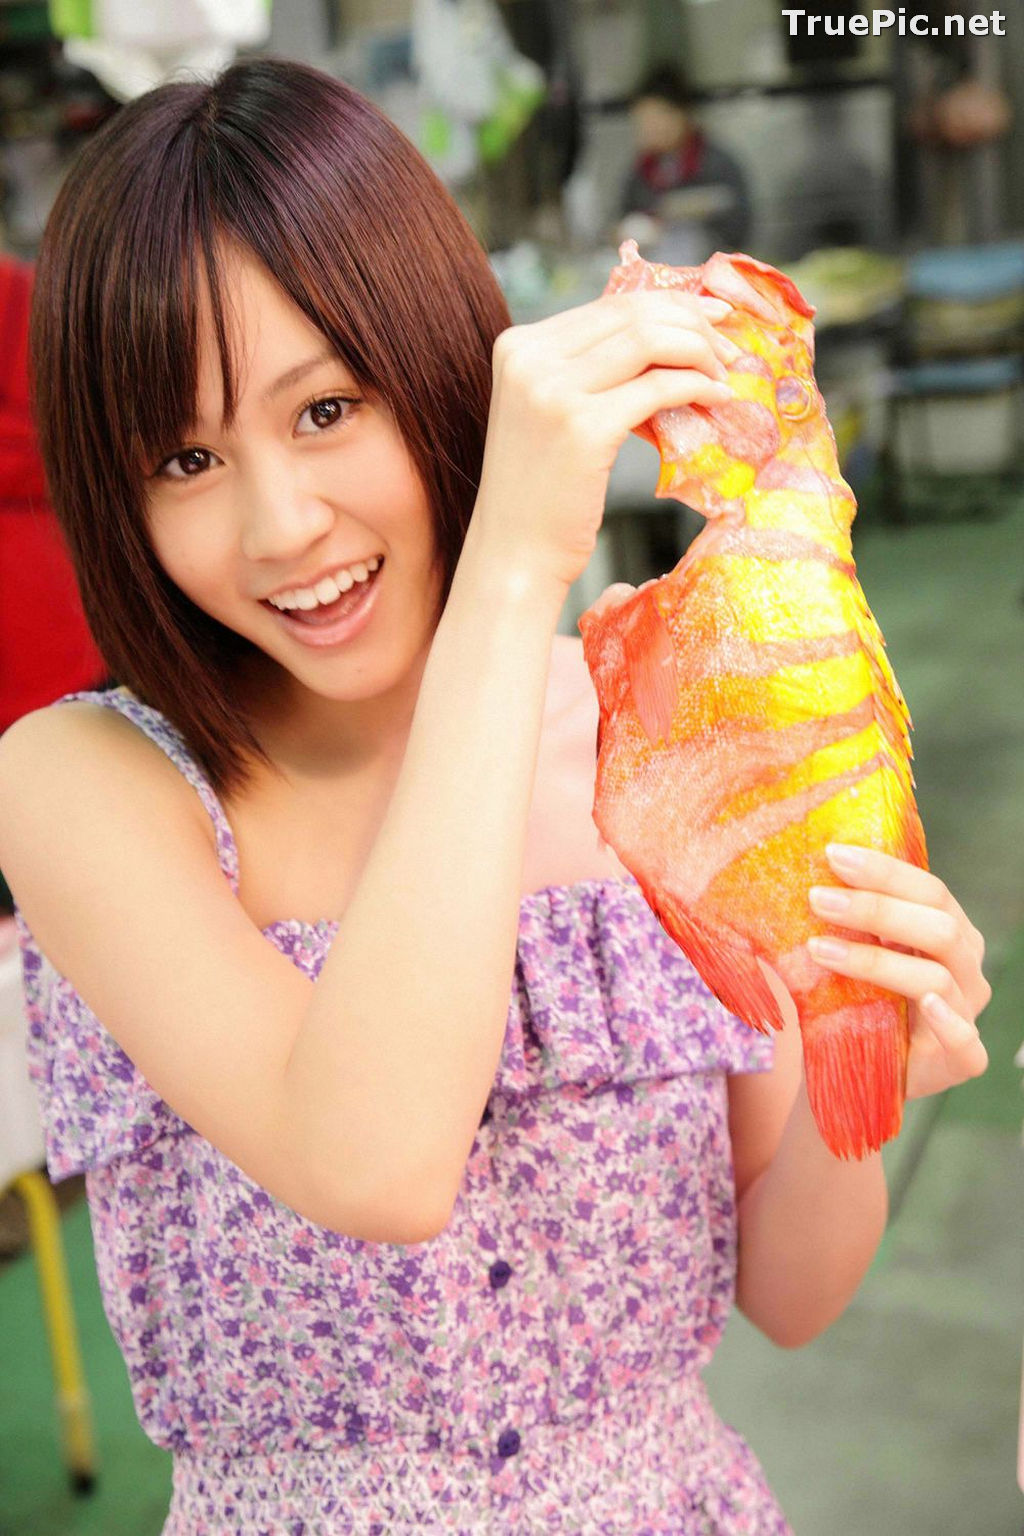 Image [YS Web] Vol.330 - Japanese Actress and Singer - Maeda Atsuko - TruePic.net - Picture-52